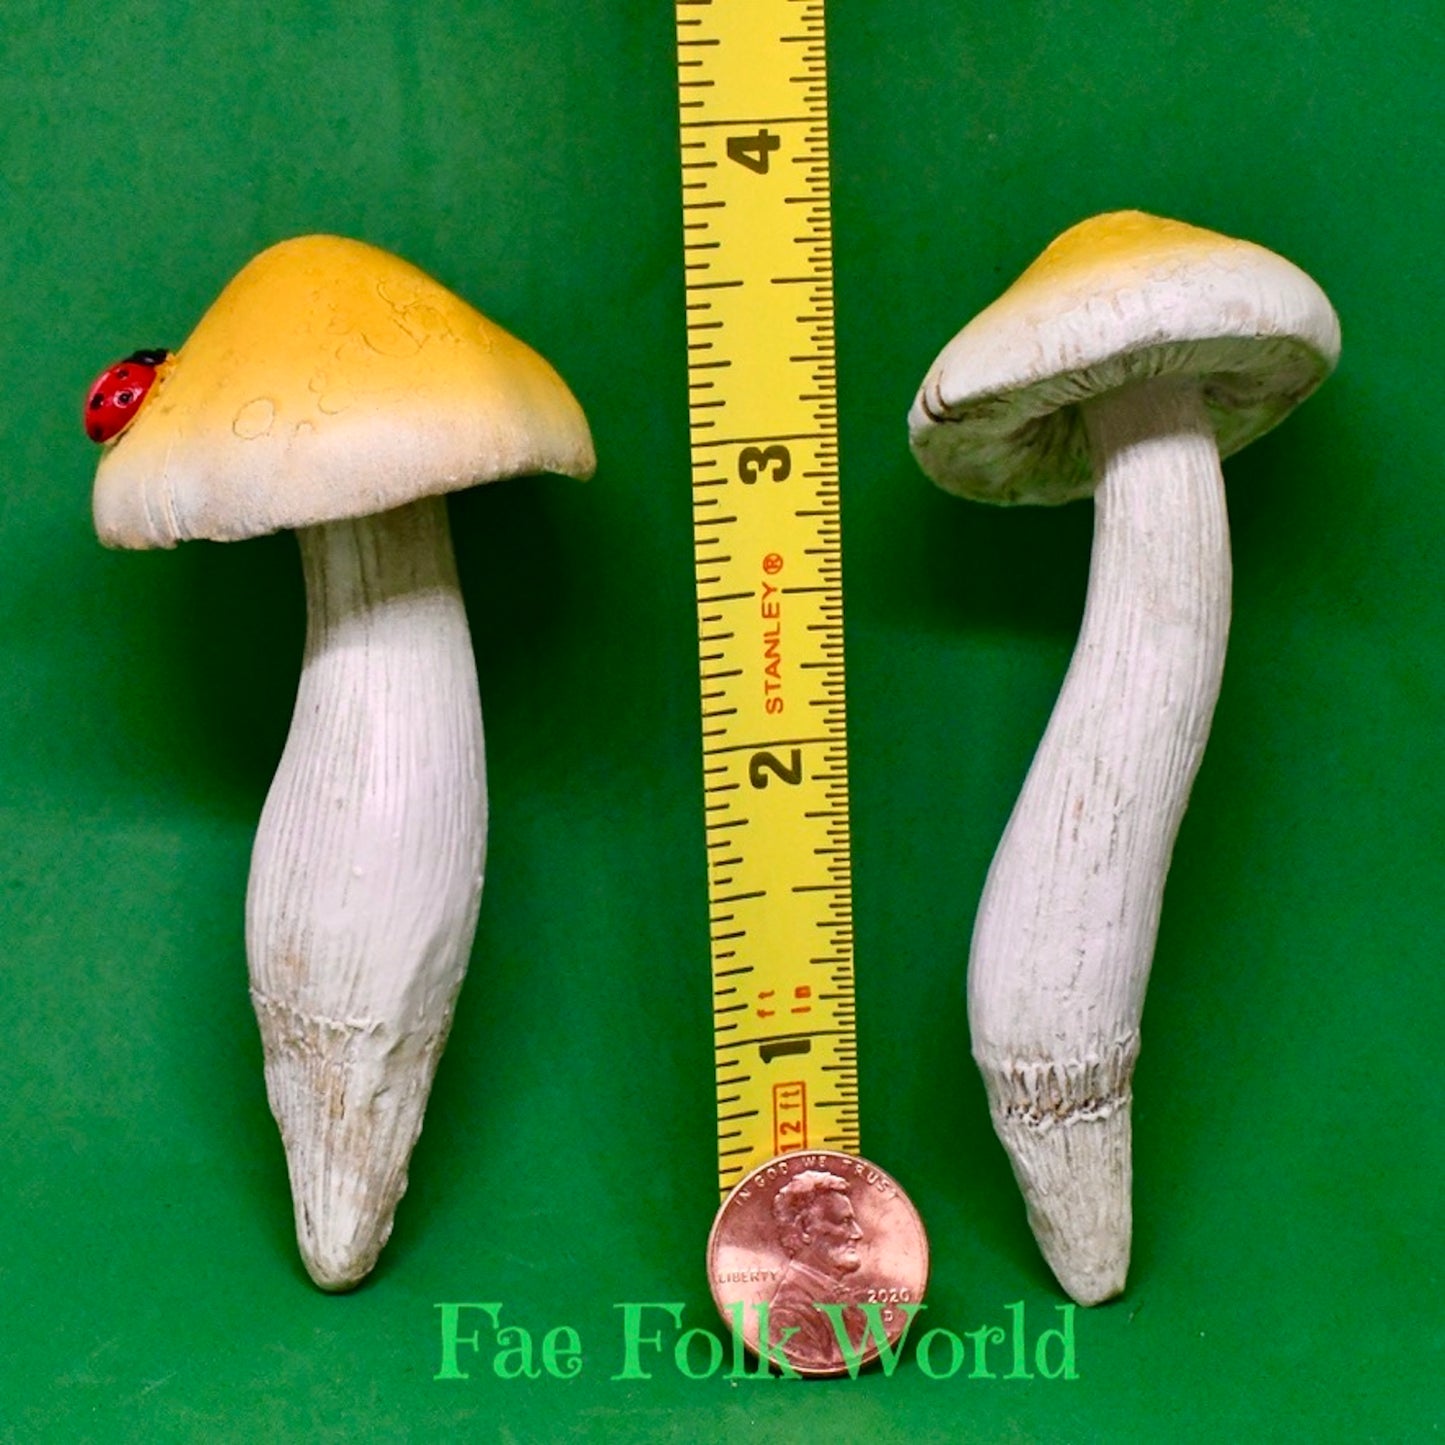 Fairy Garden Yellow Mushroom Set